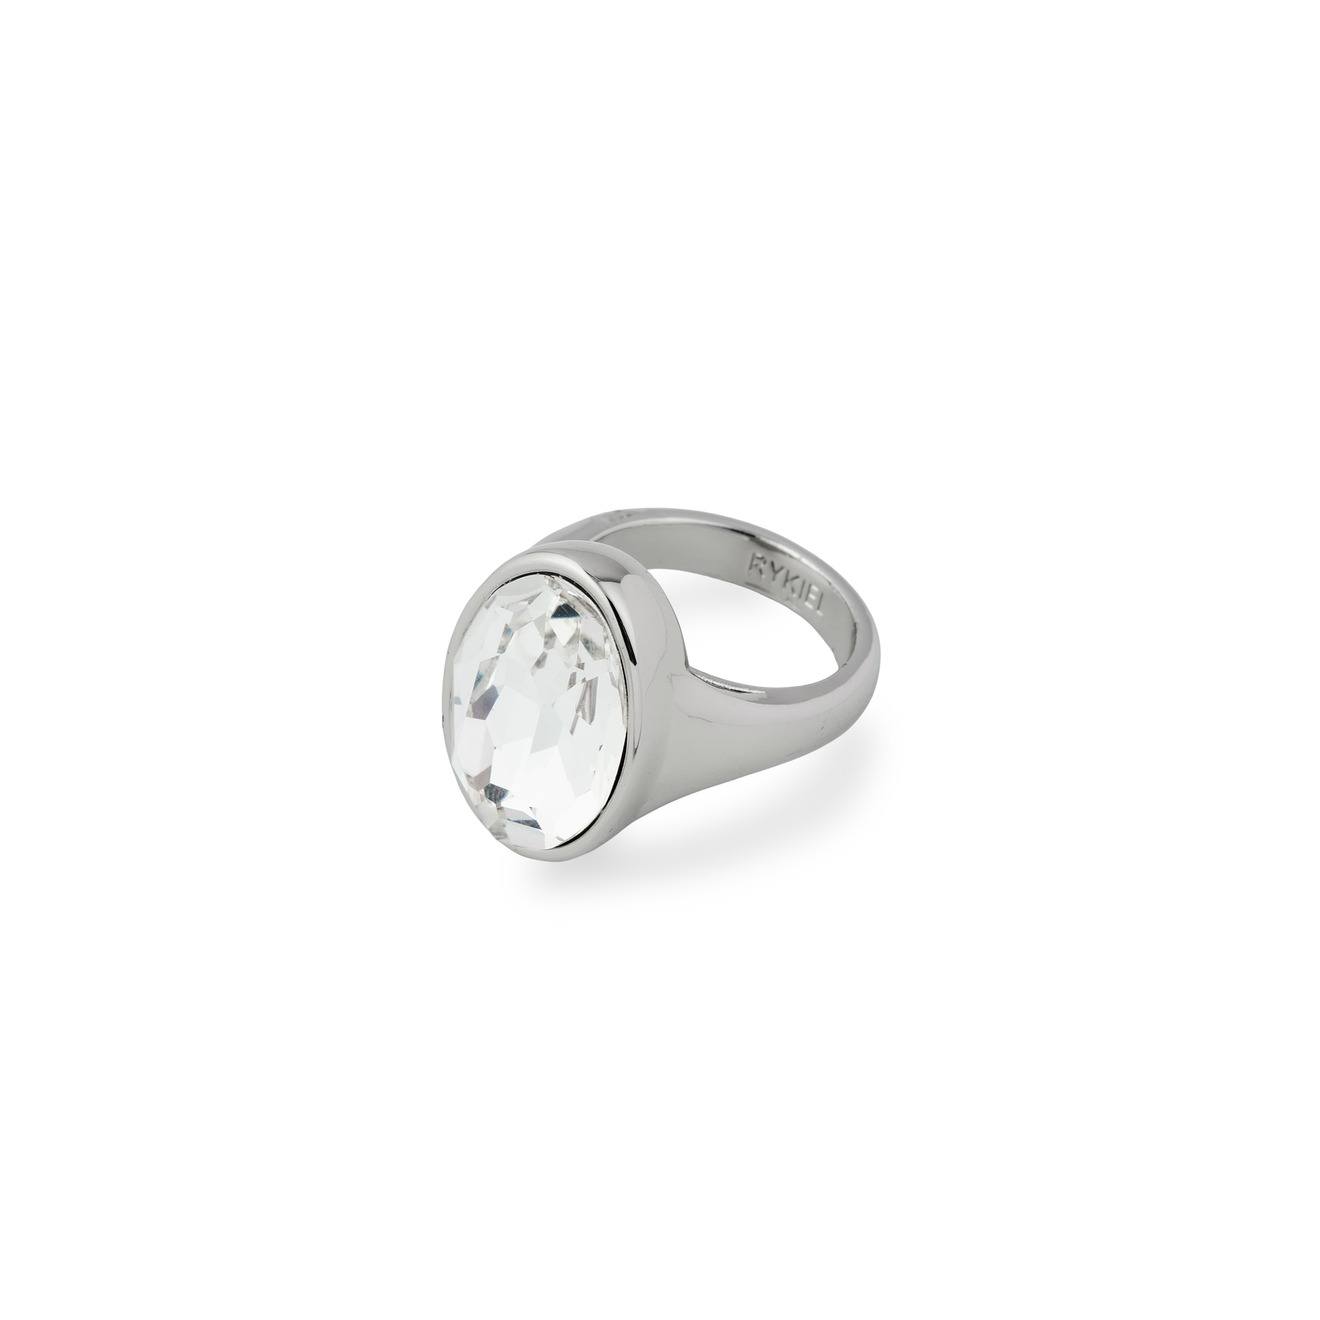 SONIA RYKIEL Объемное серебристое кольцо с кристаллом sonia rykiel золотистый браслет с белыми кристаллами